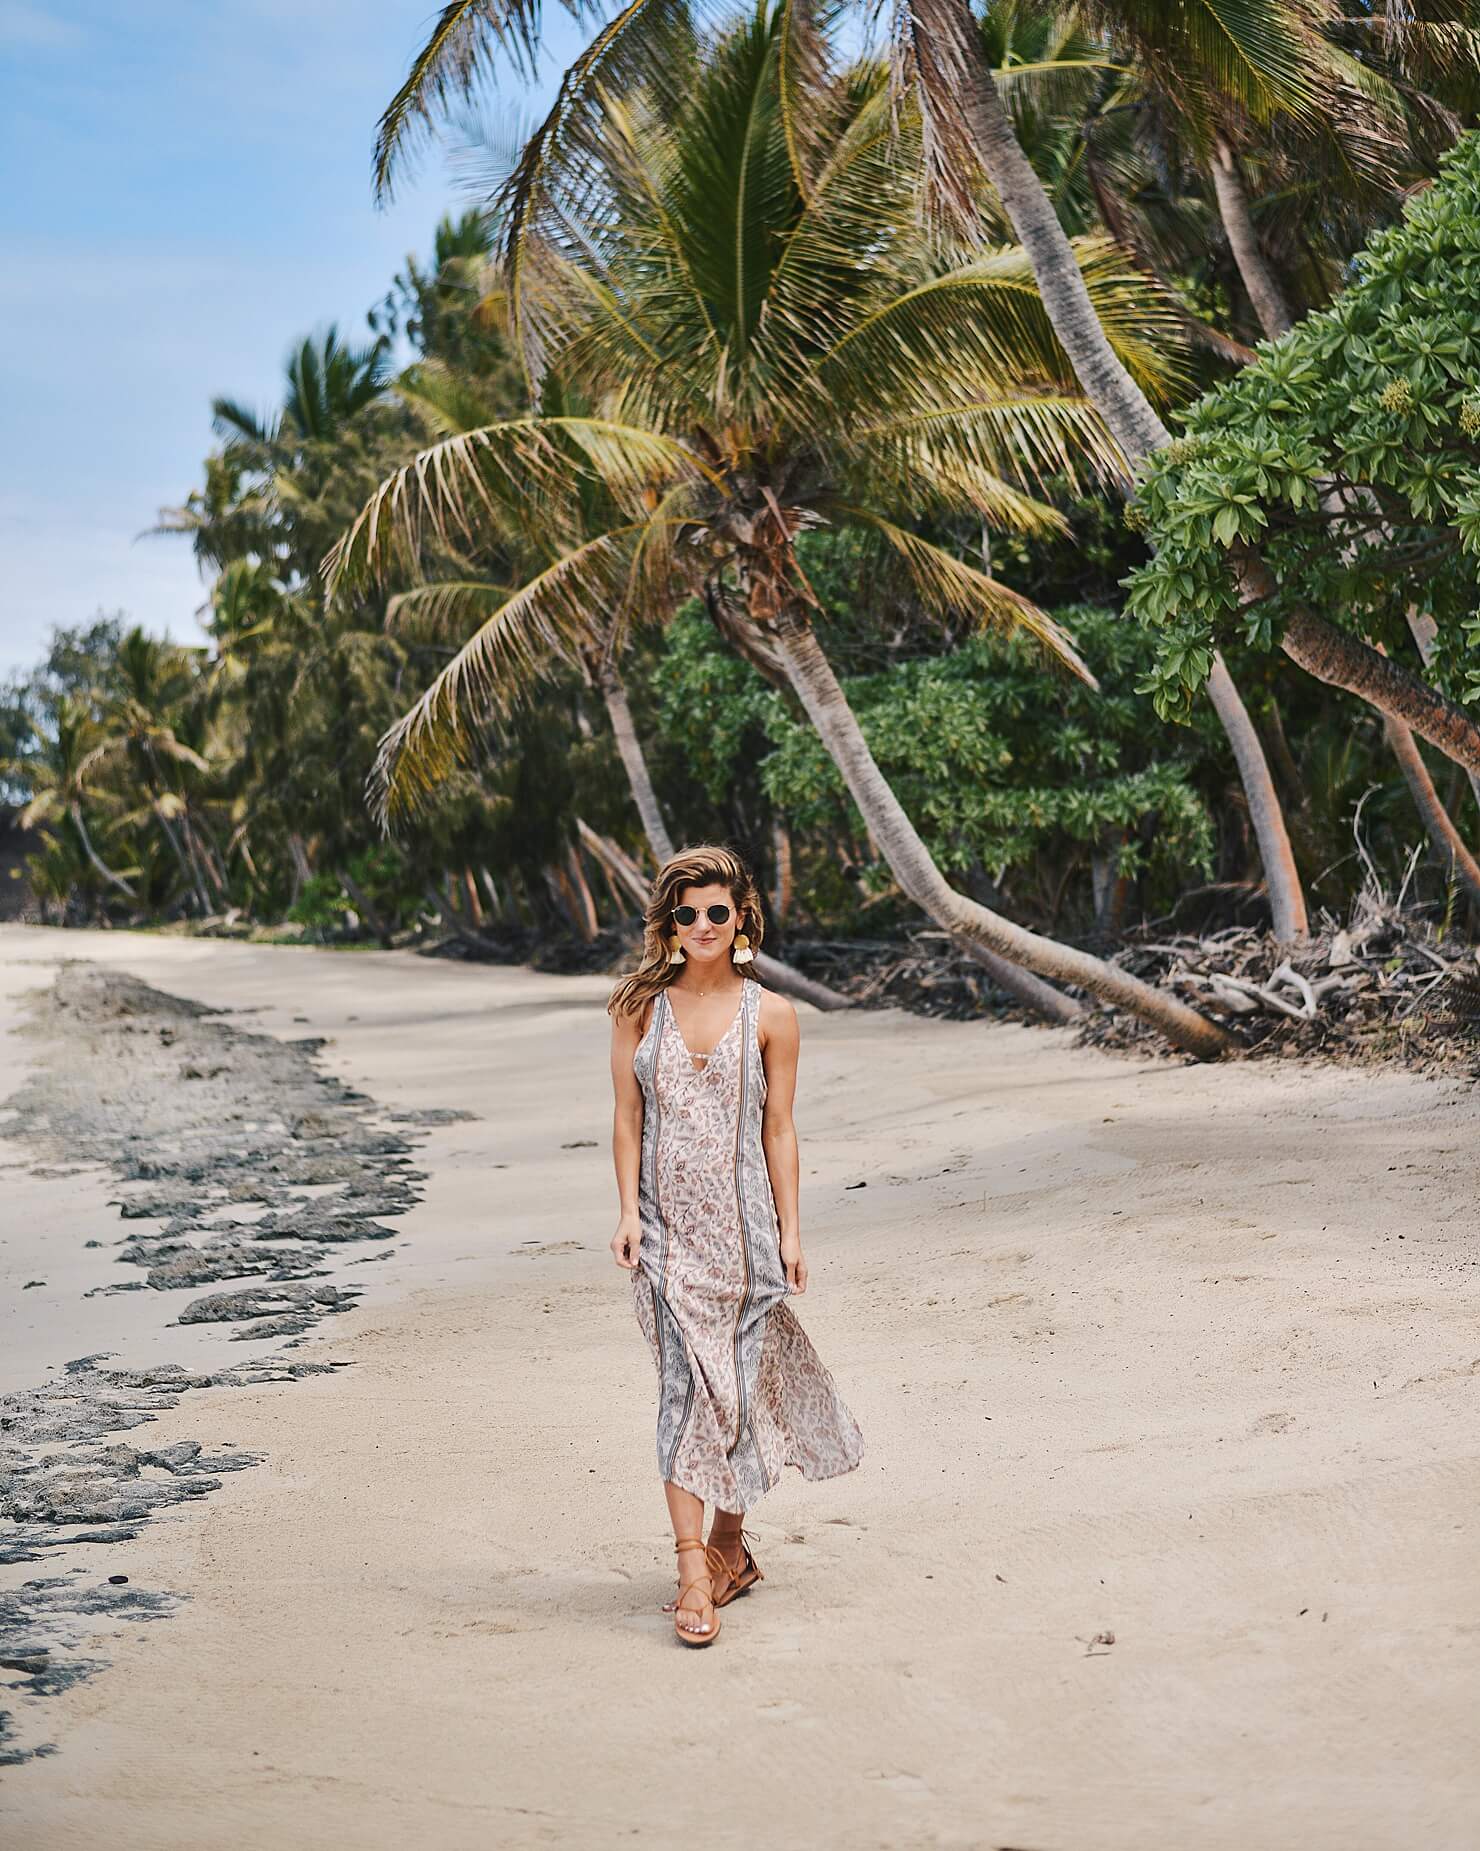 Turtle Island, Fiji - brighton keller wearing printed maxi dress on beach